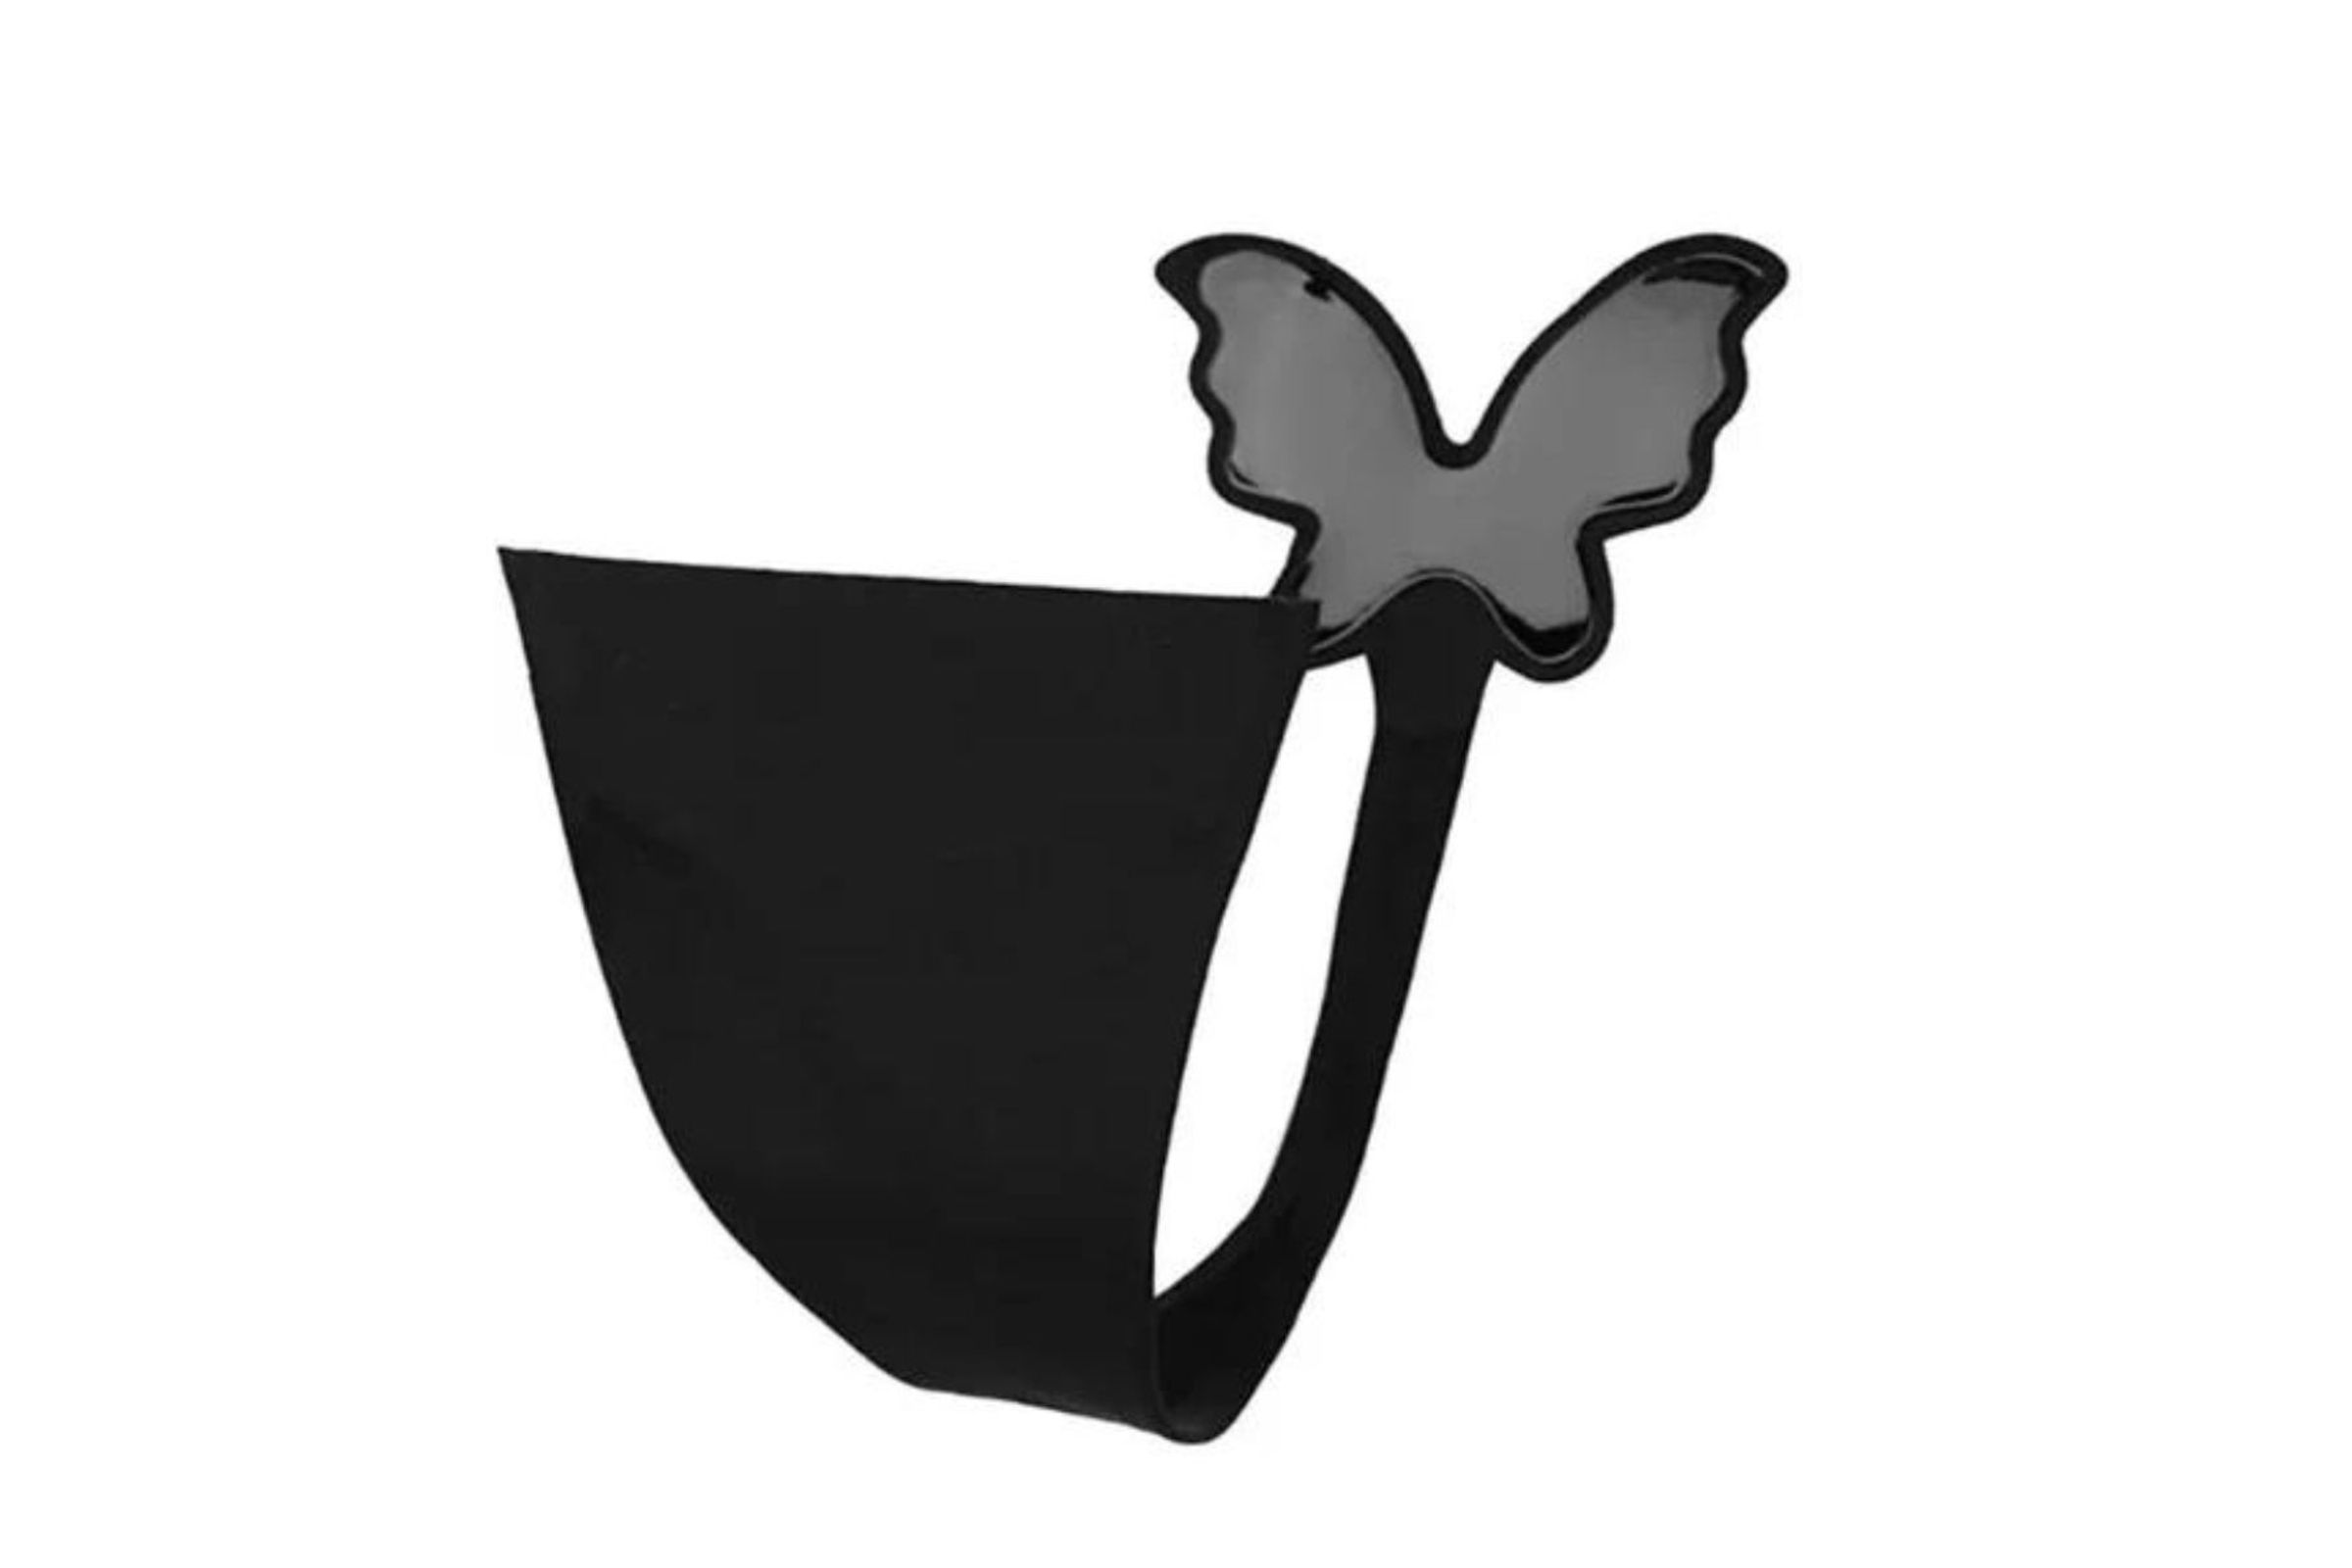 https://cdnimg.pinktownusa.com/tr:h-,w-,cm-pad_resize/media/catalog/product/image/1093296ab/panty-black-medium-butterfly-thong-for-women.jpg?ik-sdk-version=php-1.2.2